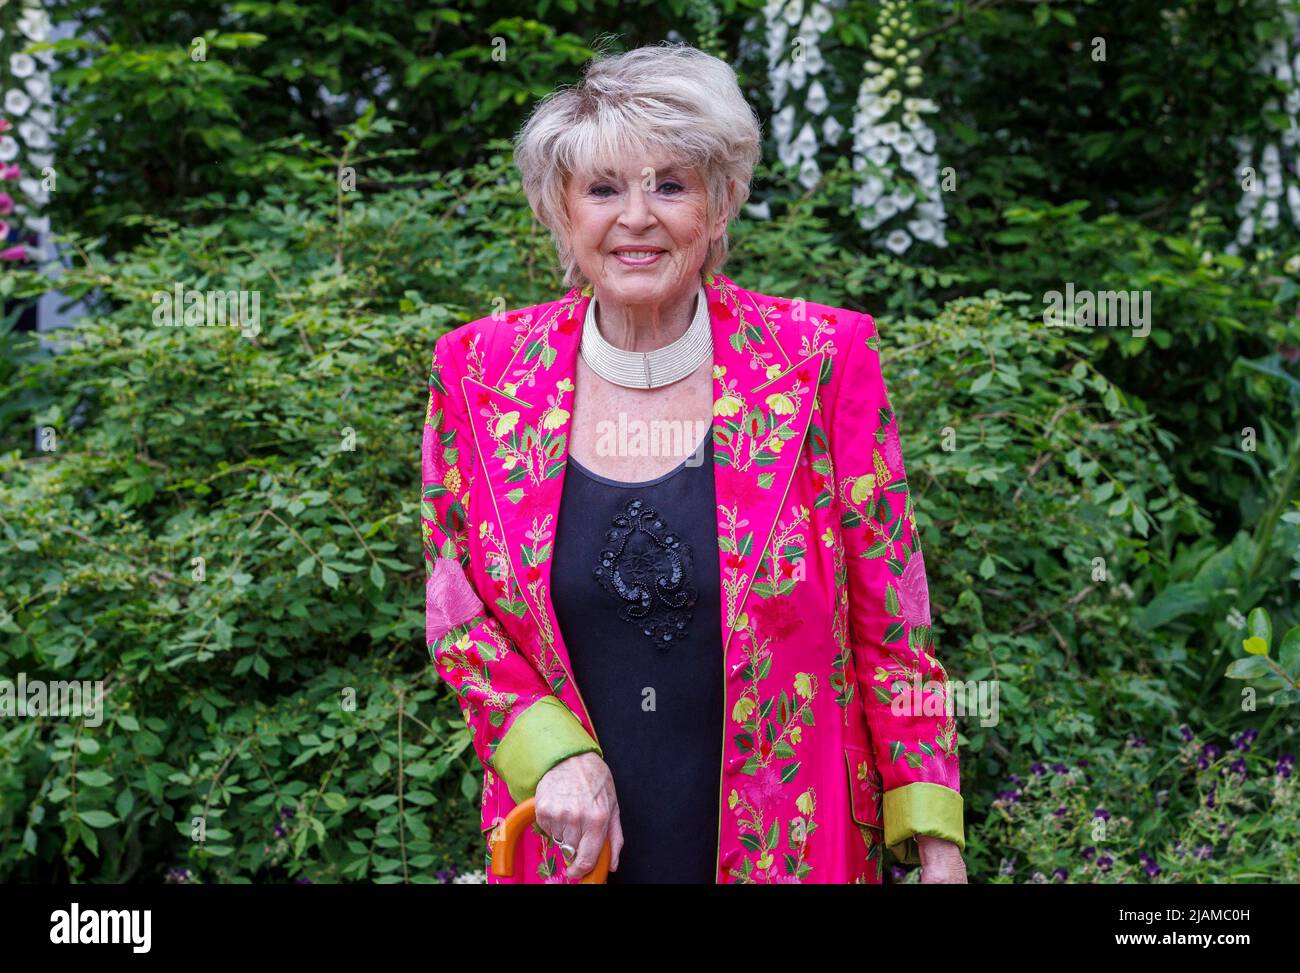 Gloria Hunniford, Northern Irish television and radio presenter, at the RHS Chelsea Flower Show. Stock Photo